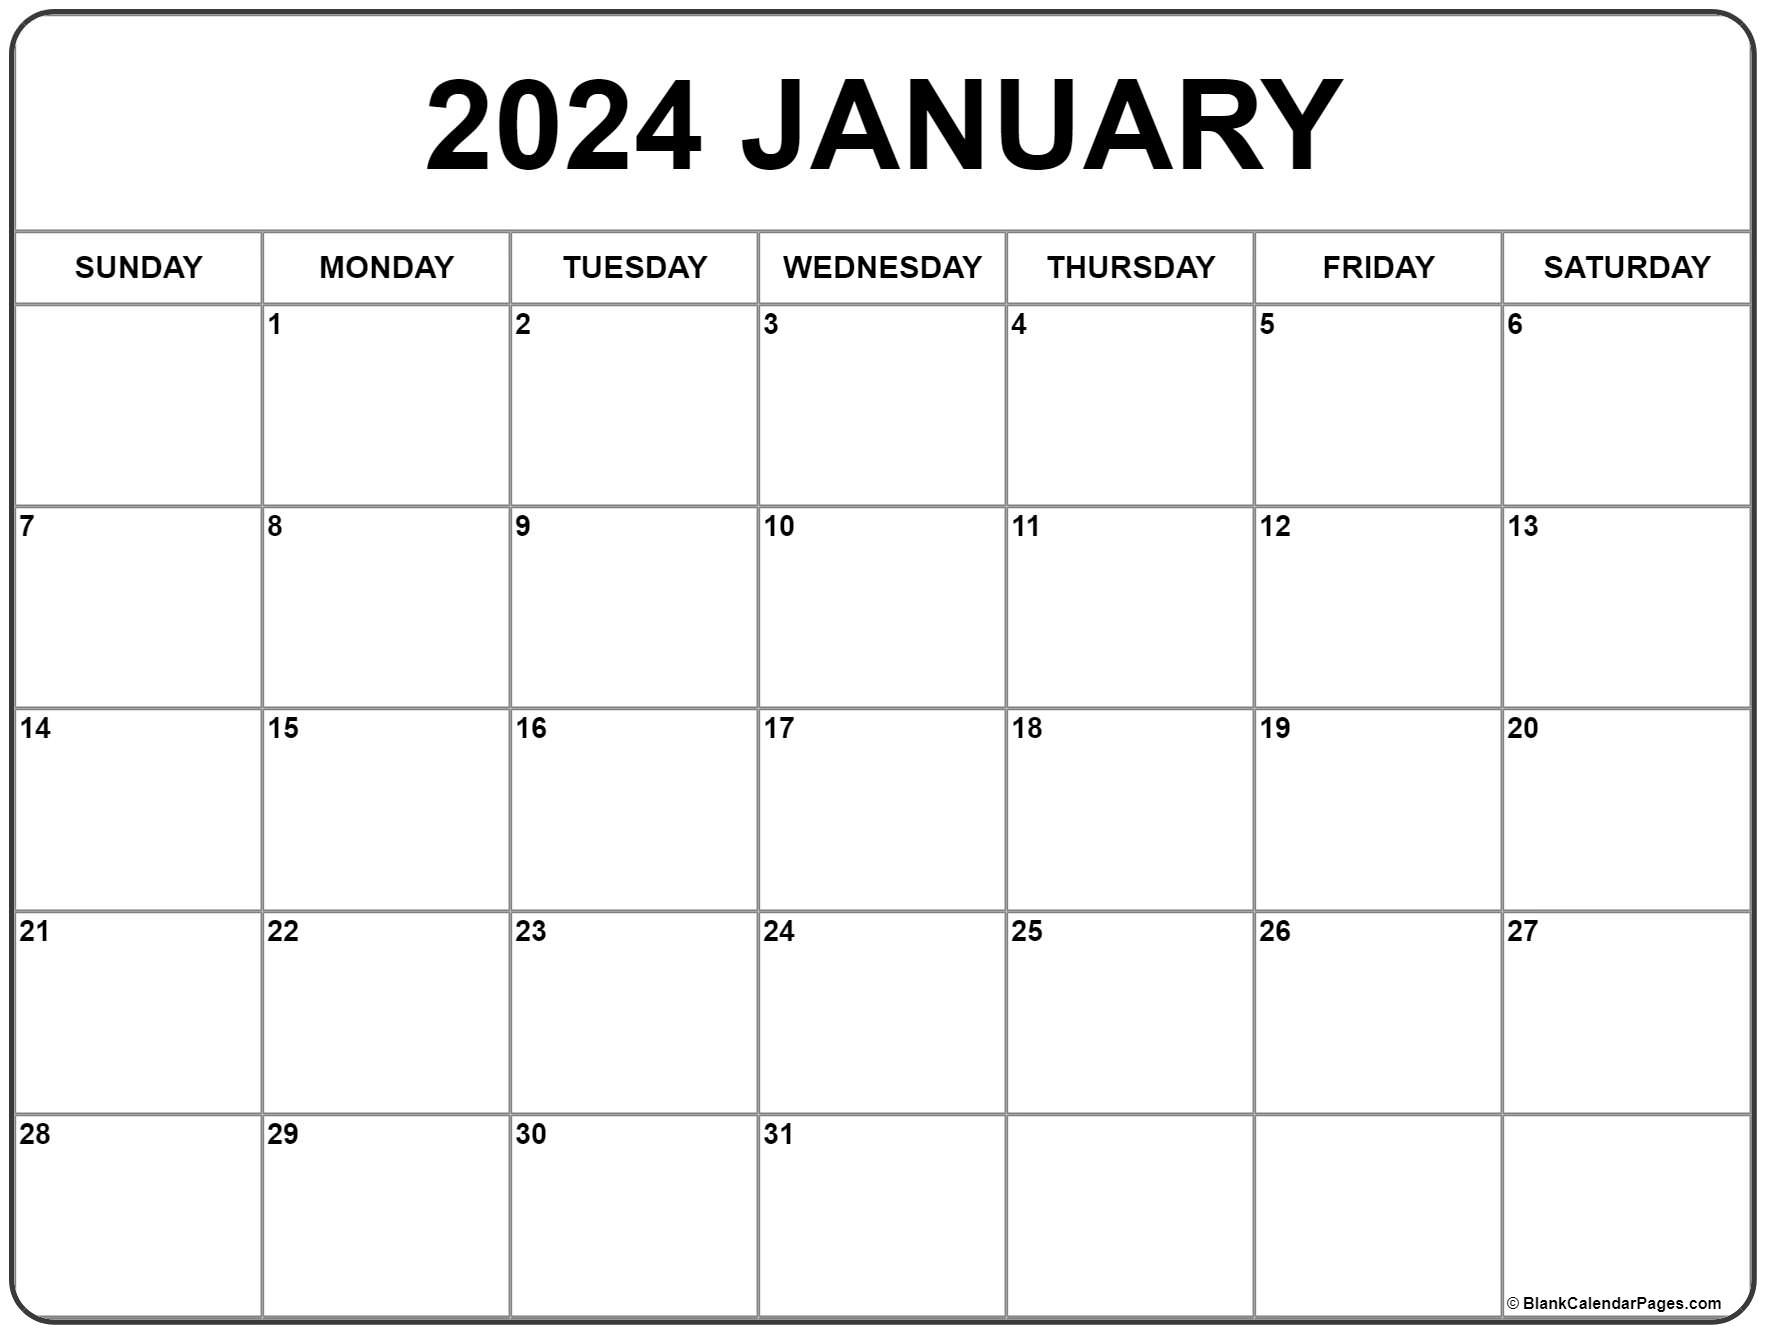 January 2024 Calendar | Free Printable Calendar for January 2024 Printable Calendar Page